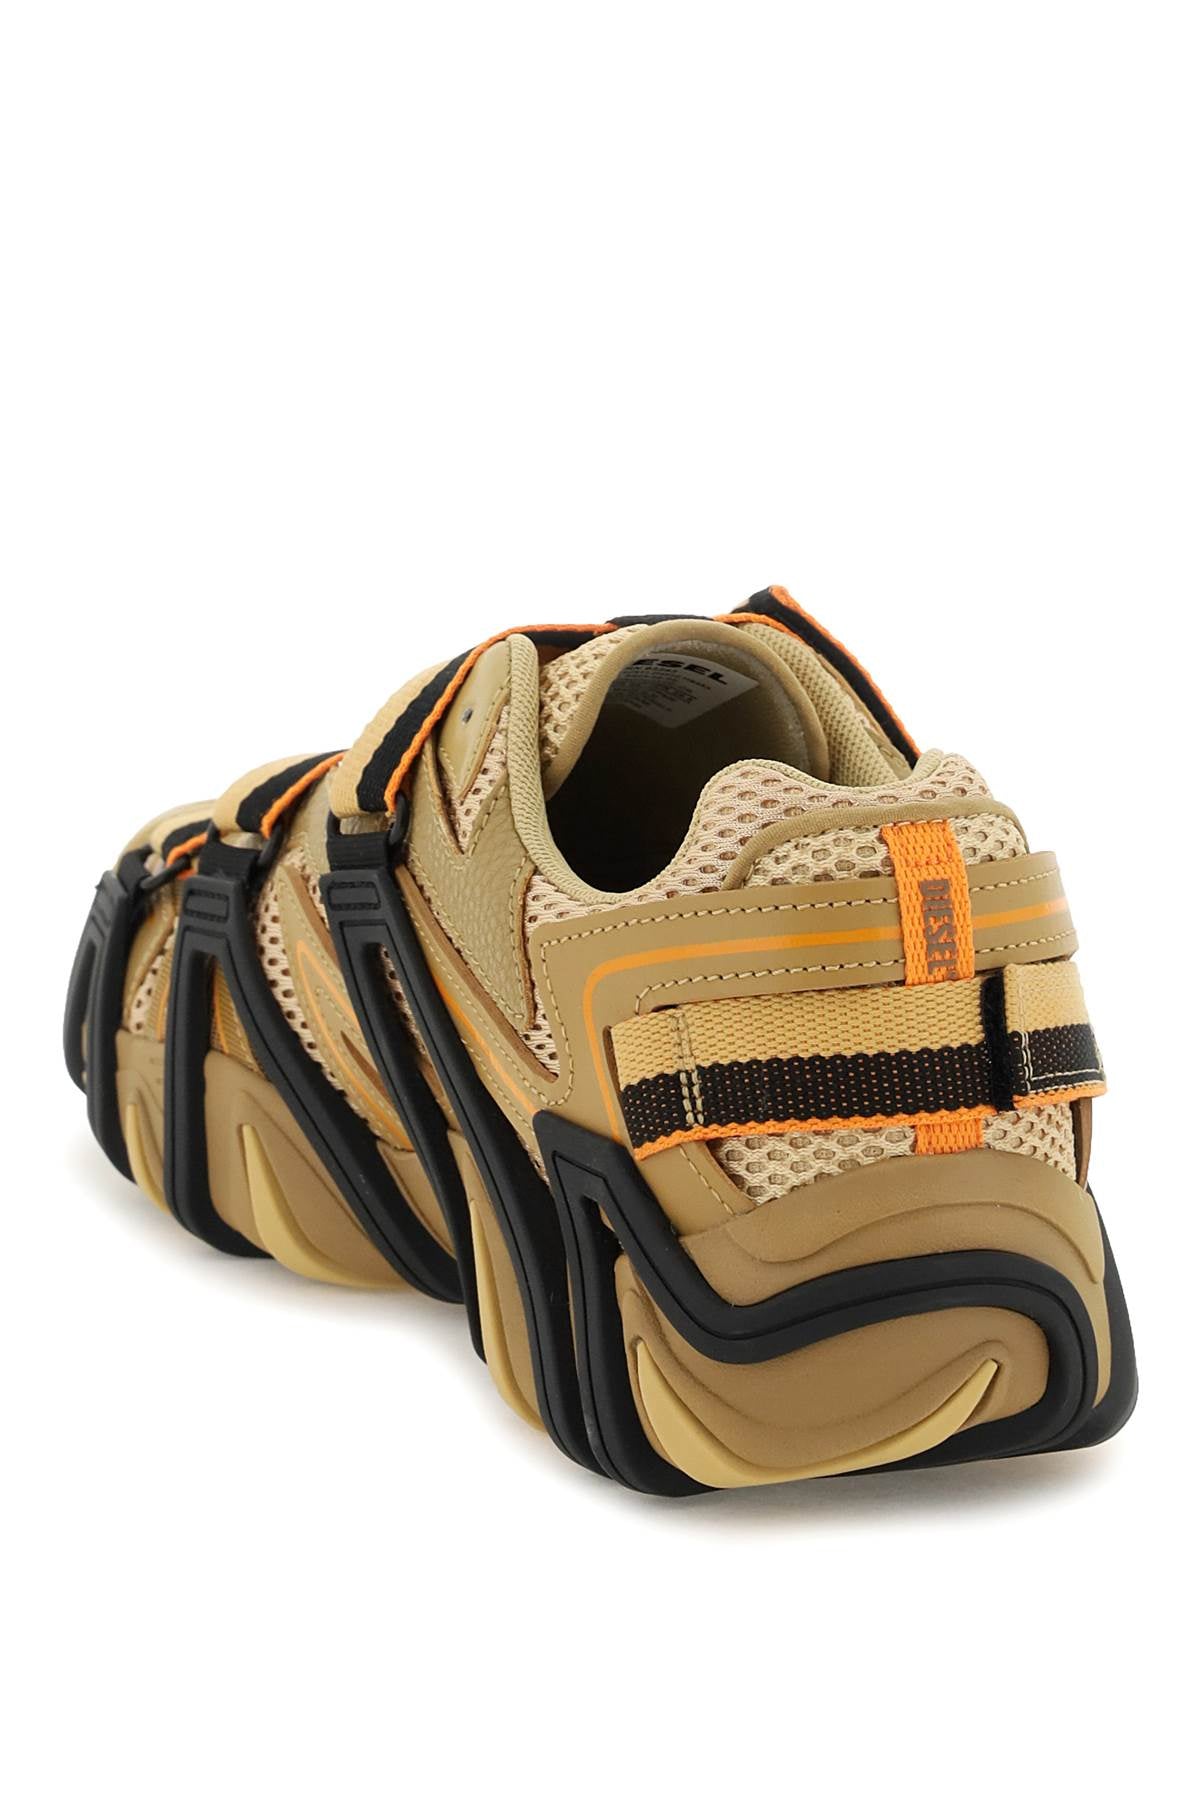 Sparx Men Grey, Orange Sports Sandals - Buy Sparx Men Grey, Orange Sports  Sandals Online at Best Price - Shop Online for Footwears in India |  Flipkart.com